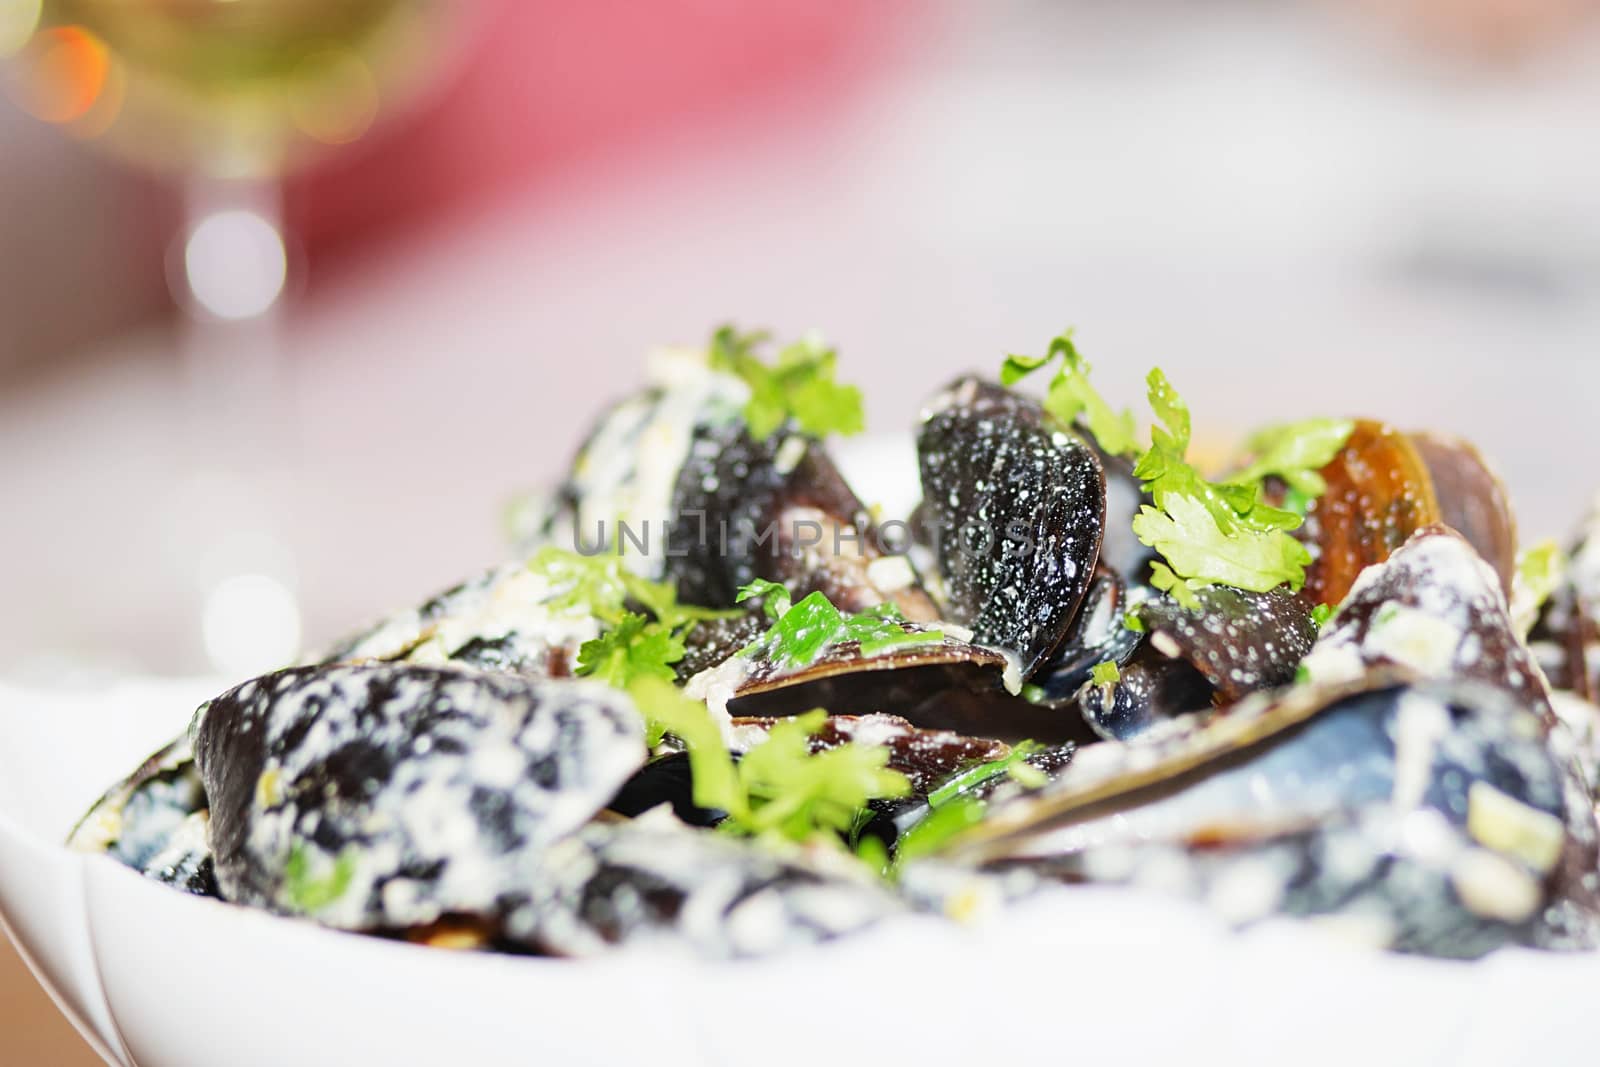 Steamed mussels in a white wine sauce by natazhekova